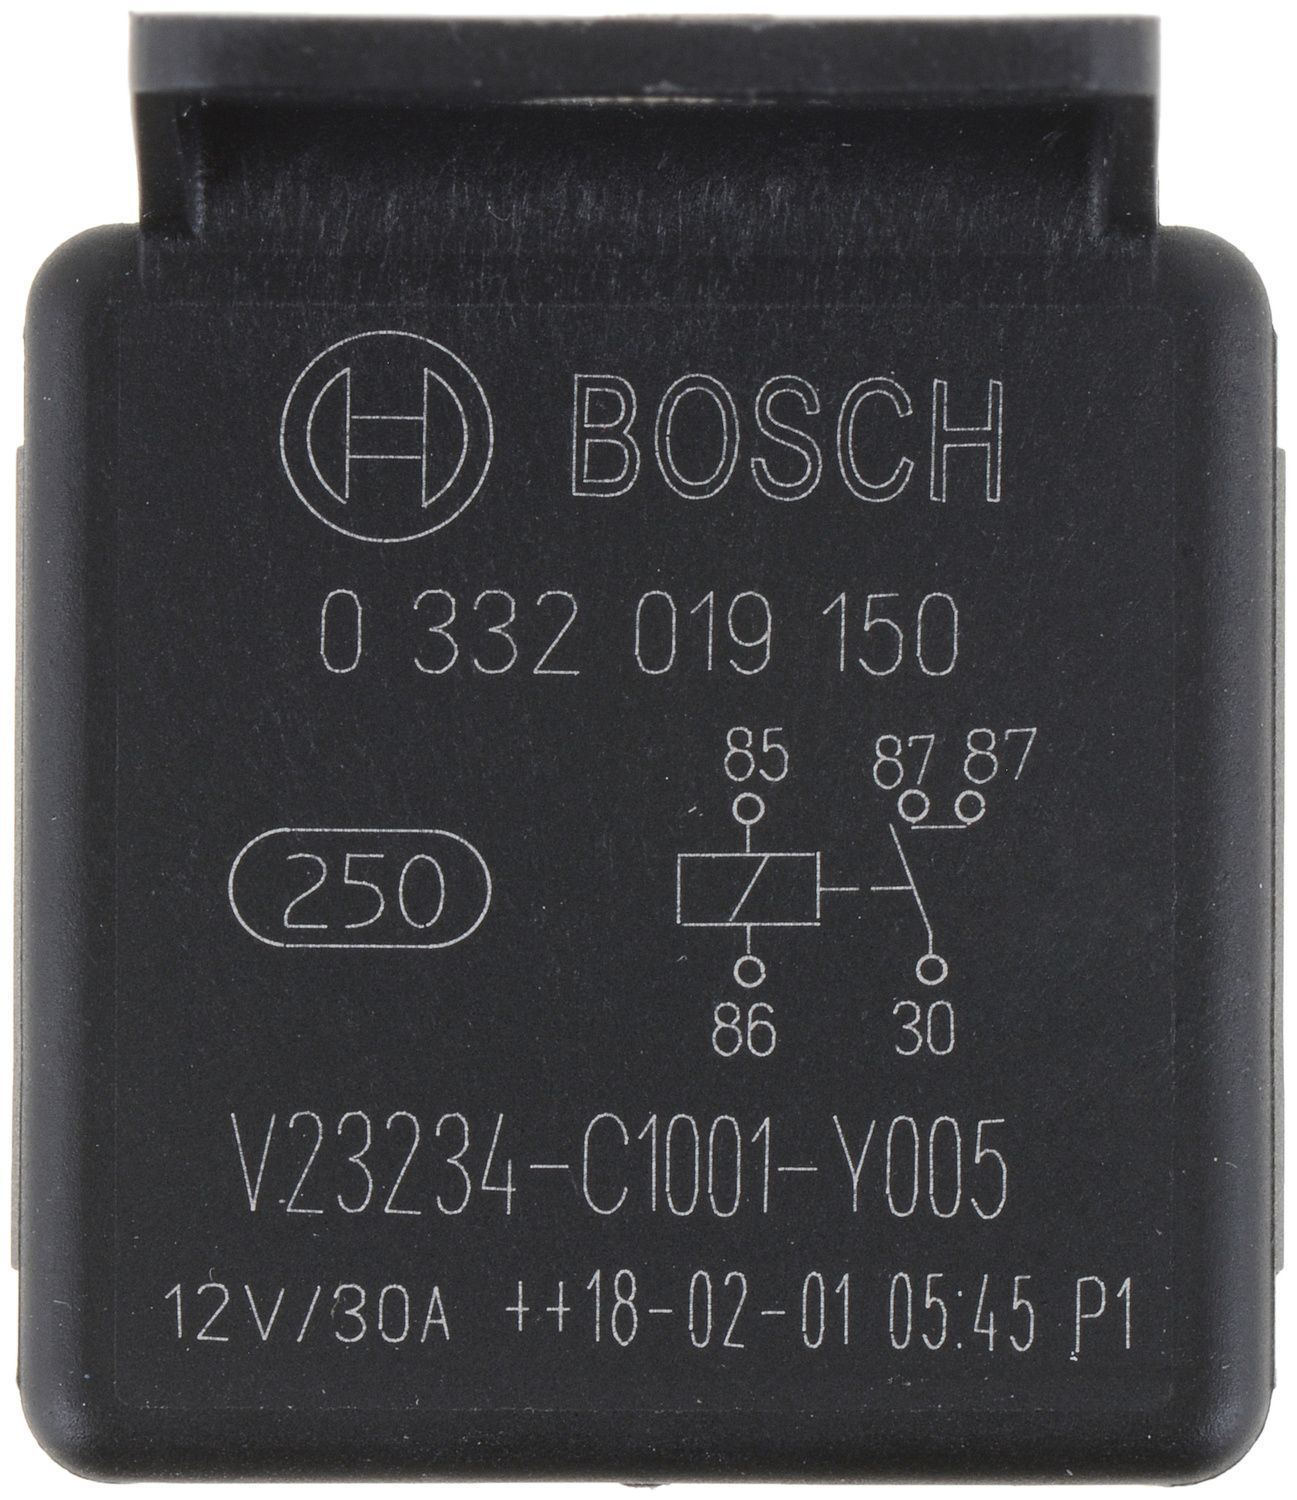 BOSCH - Starter Relay - BOS 0332019150